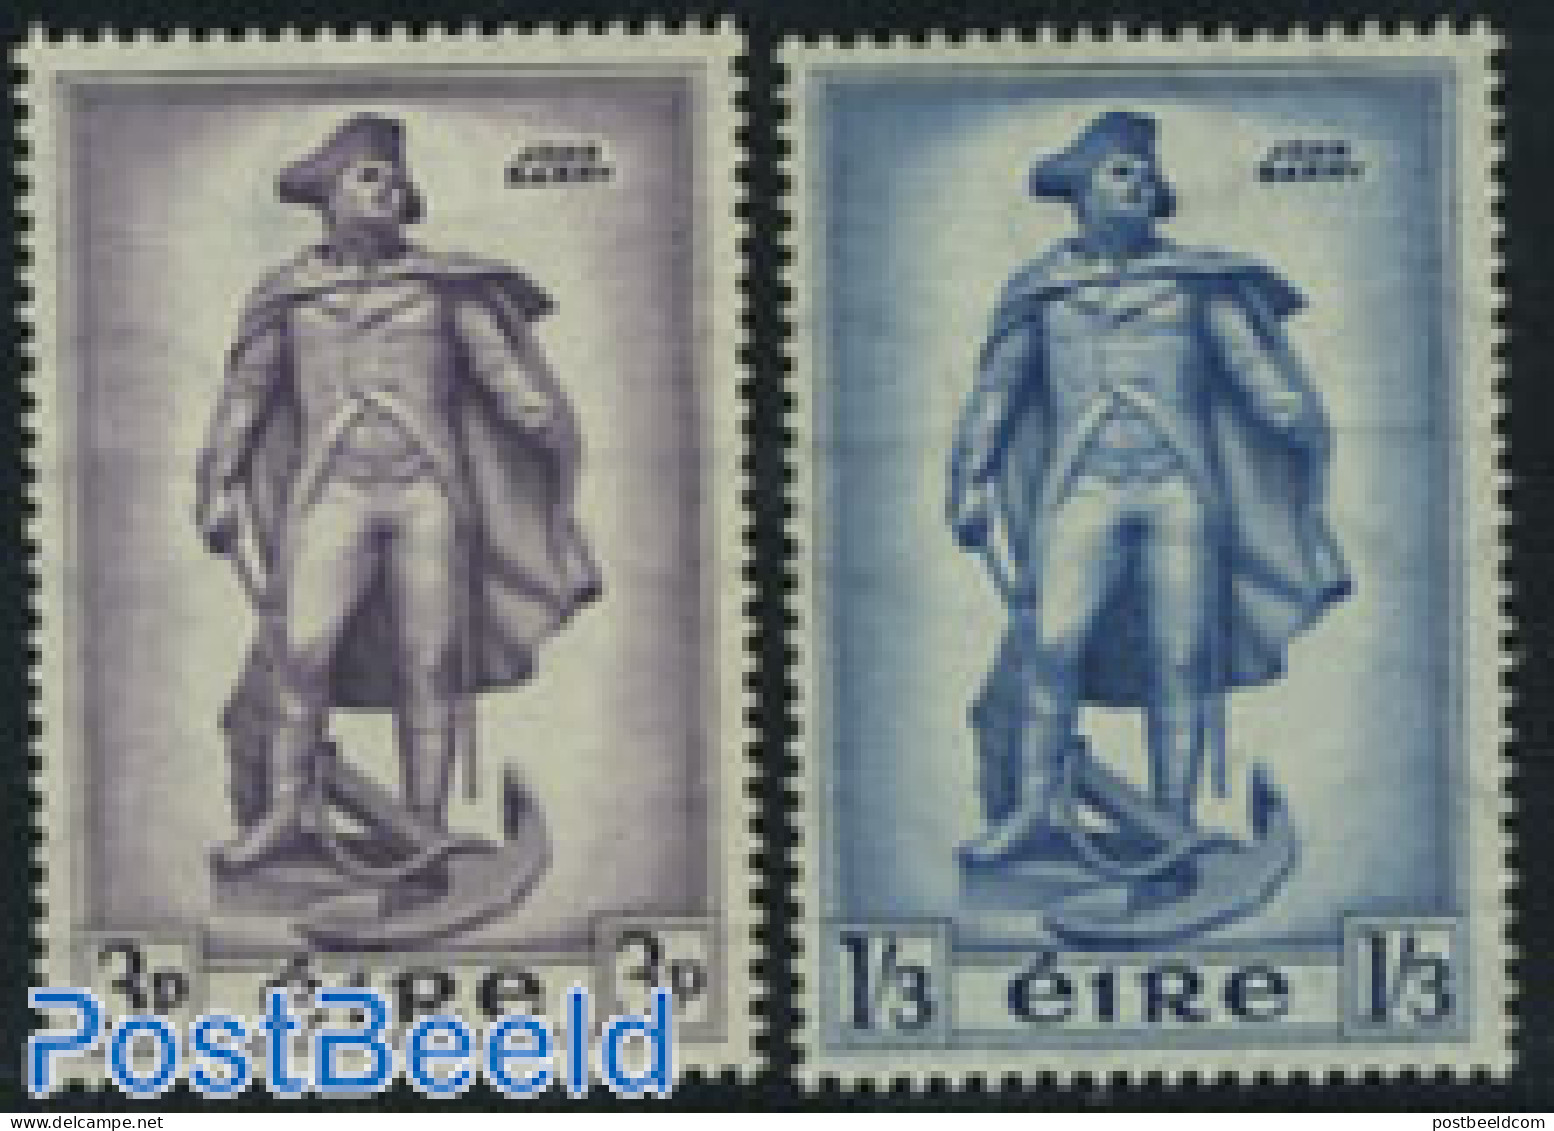 Ireland 1956 John Barry 2v, Mint NH, Art - Sculpture - Unused Stamps